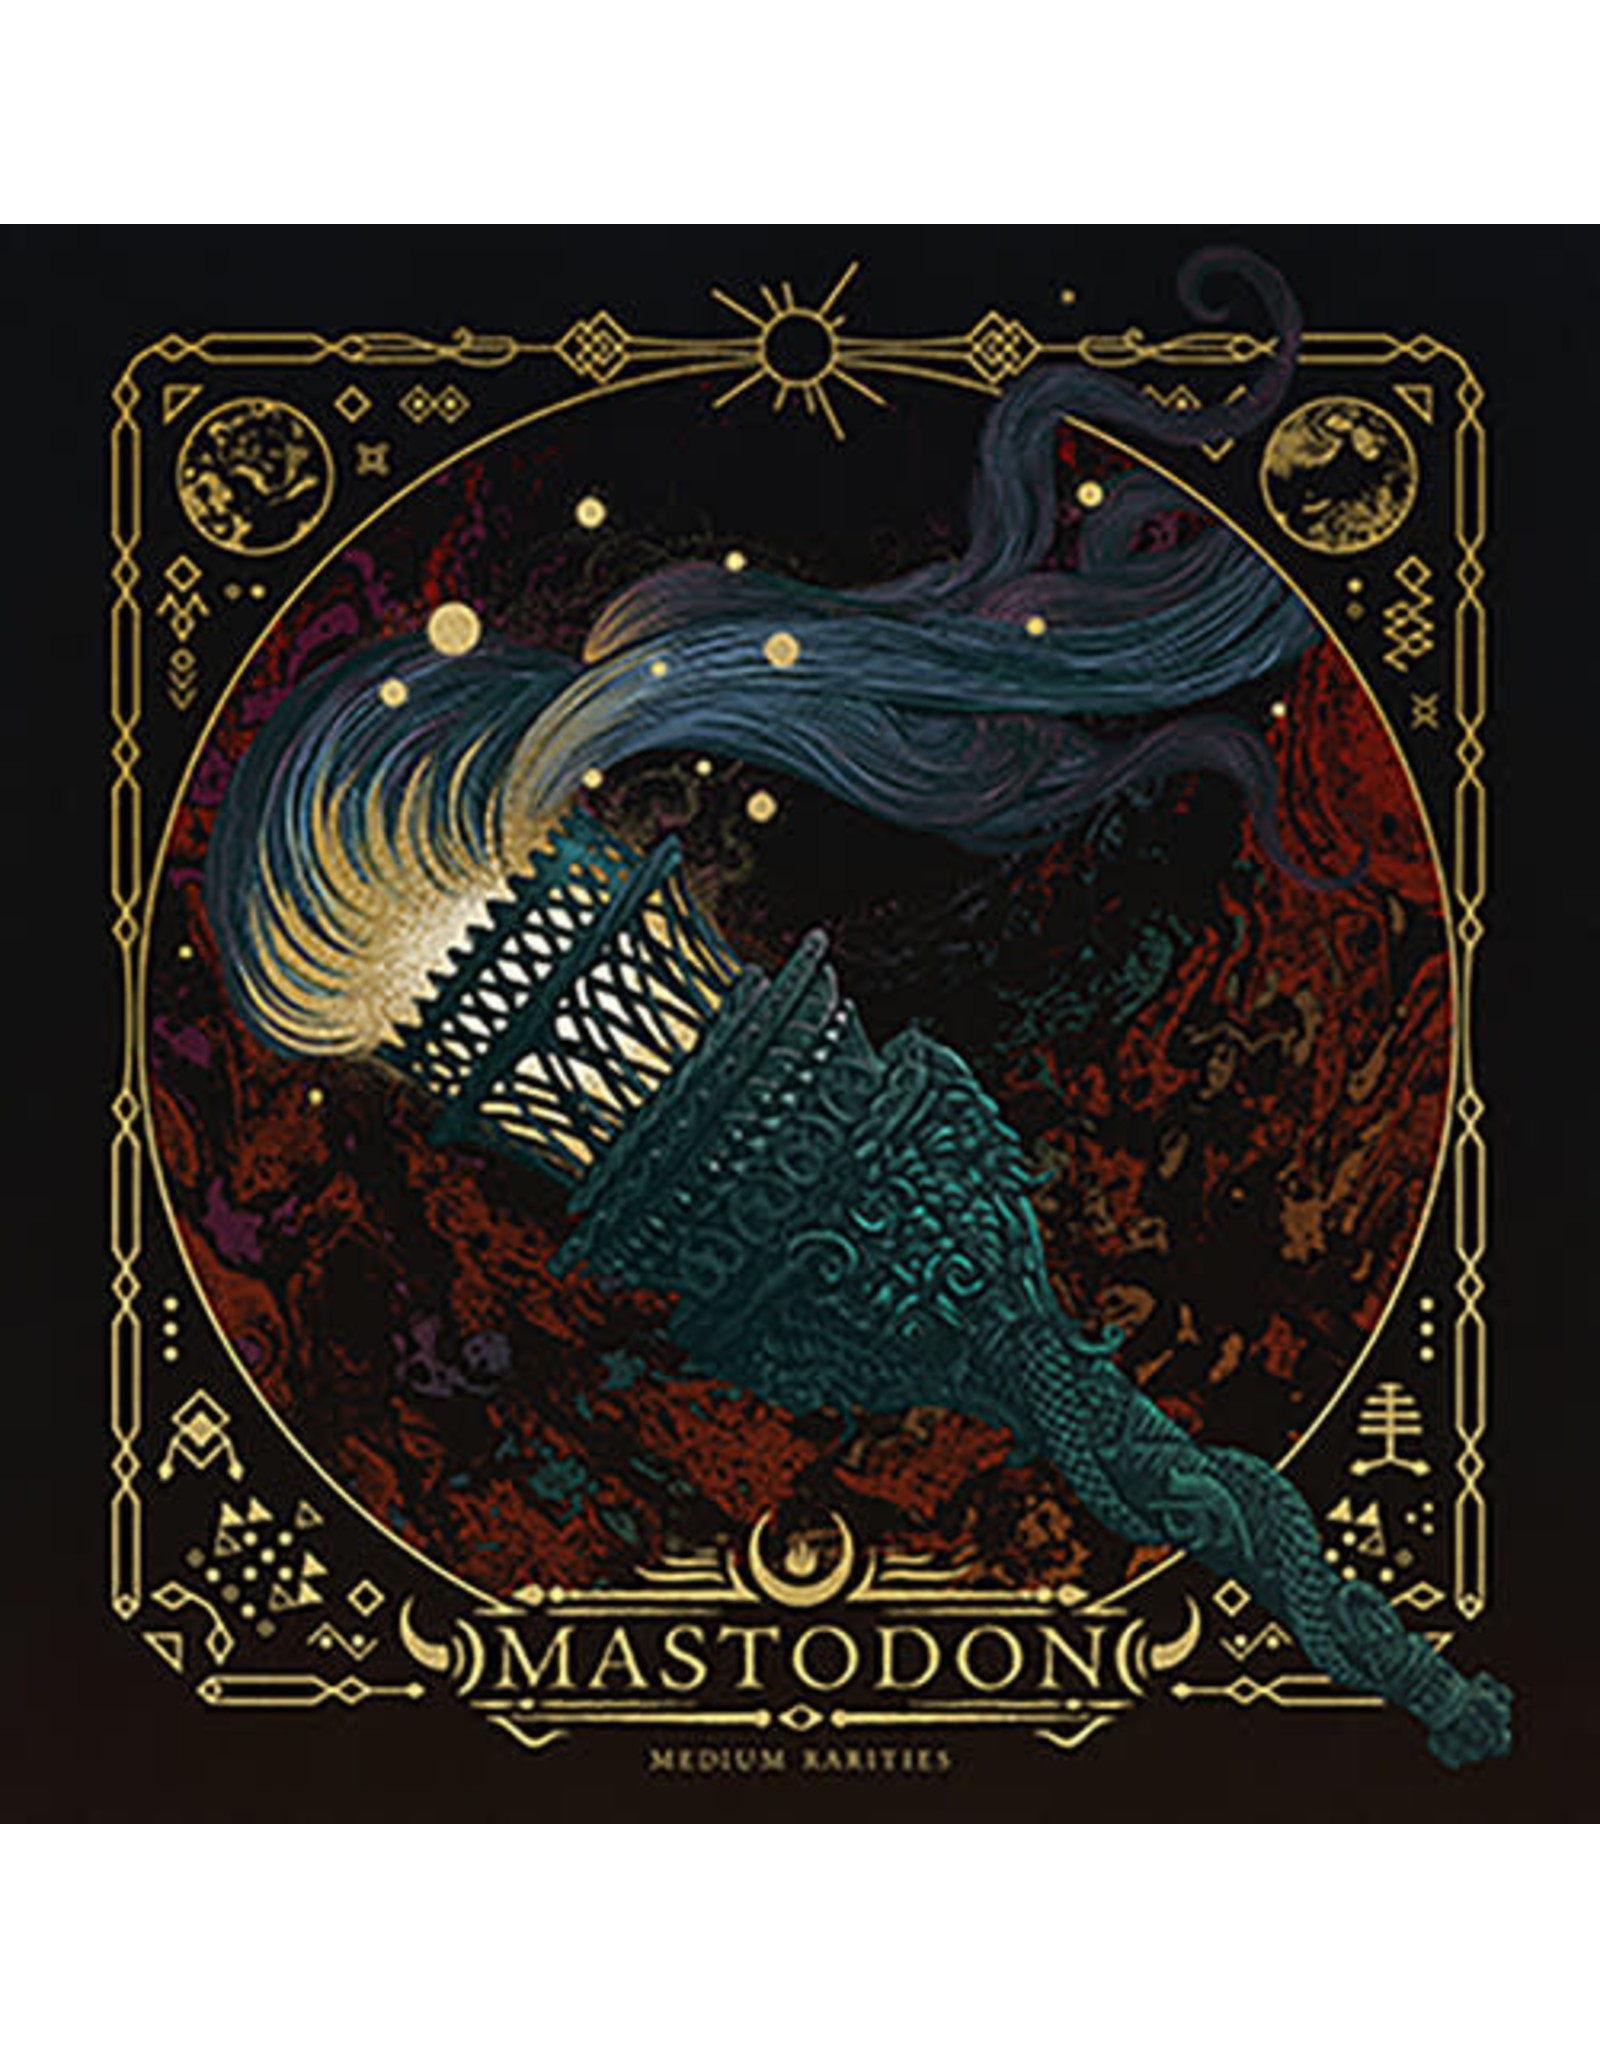 New Vinyl Mastodon - Medium Rarities (Colored) 2LP